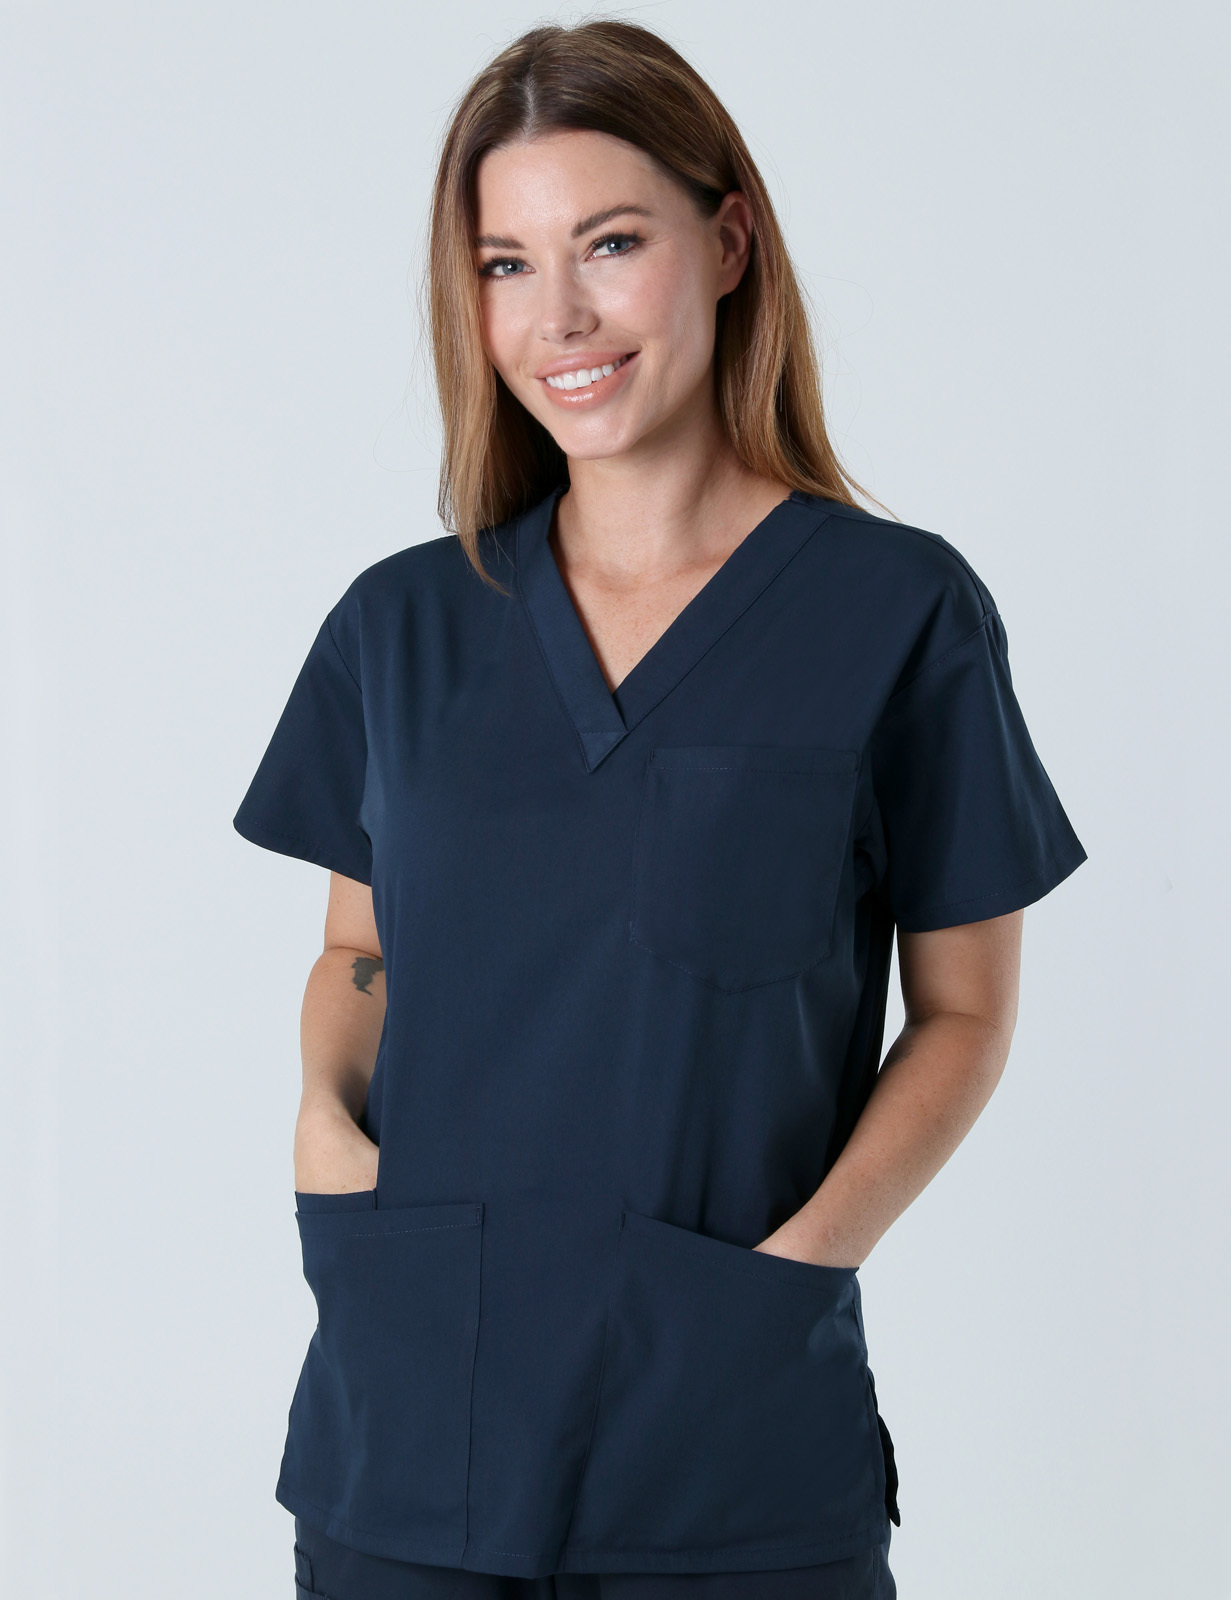 Ipswich Hospital Clinical Measurements Uniform Set Bundle (4 Pocket Top and Regular Pants in Navy + 3 Logos)